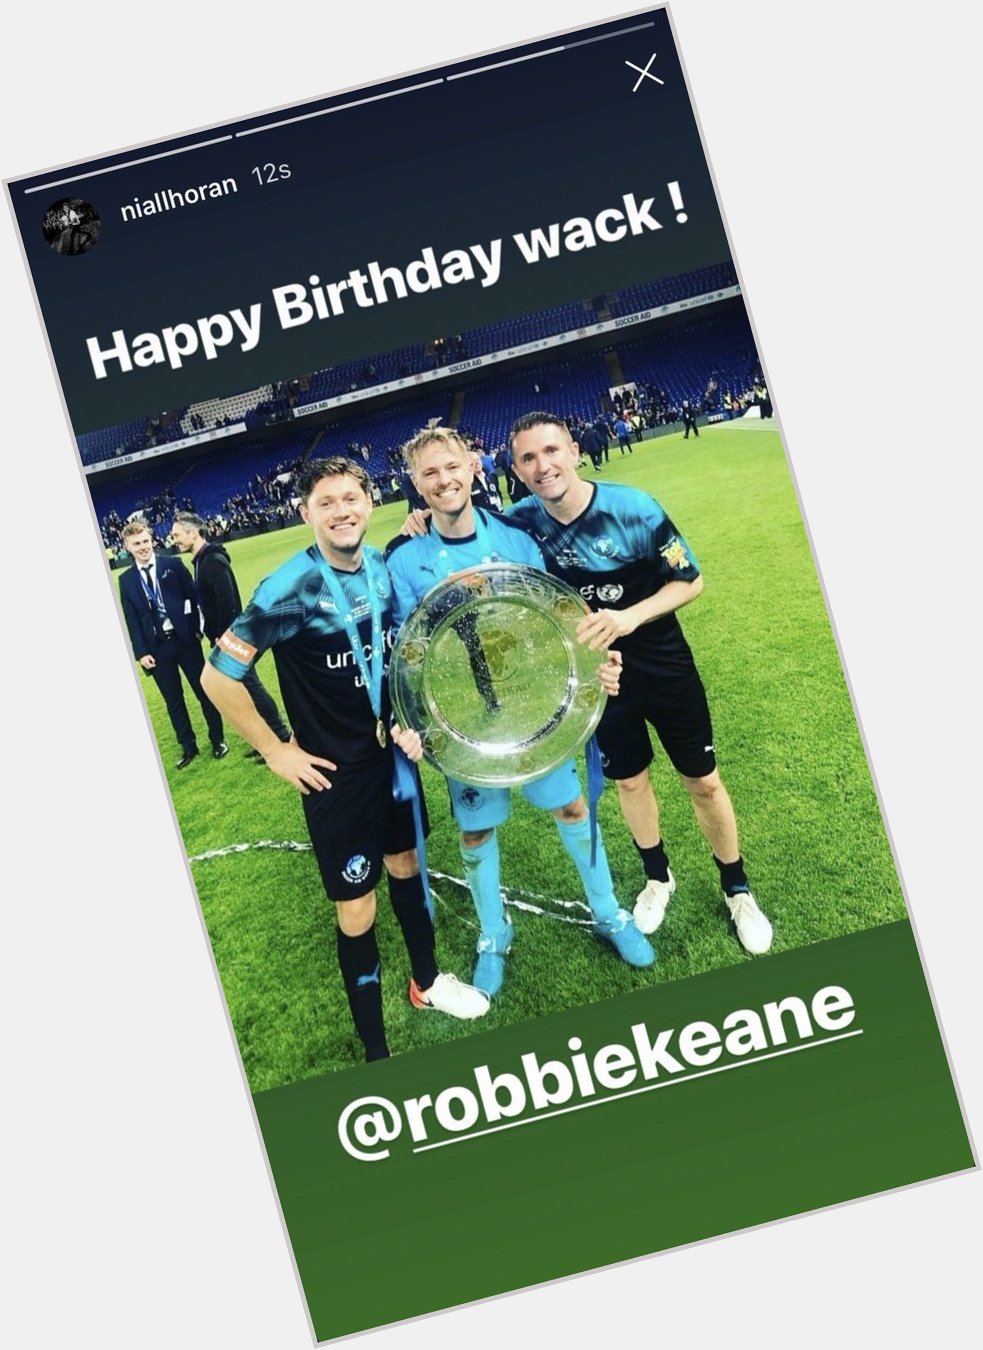 Niall wishing his close friend Robbie Keane a Happy Birthday wack on his IG story. (July 8) 